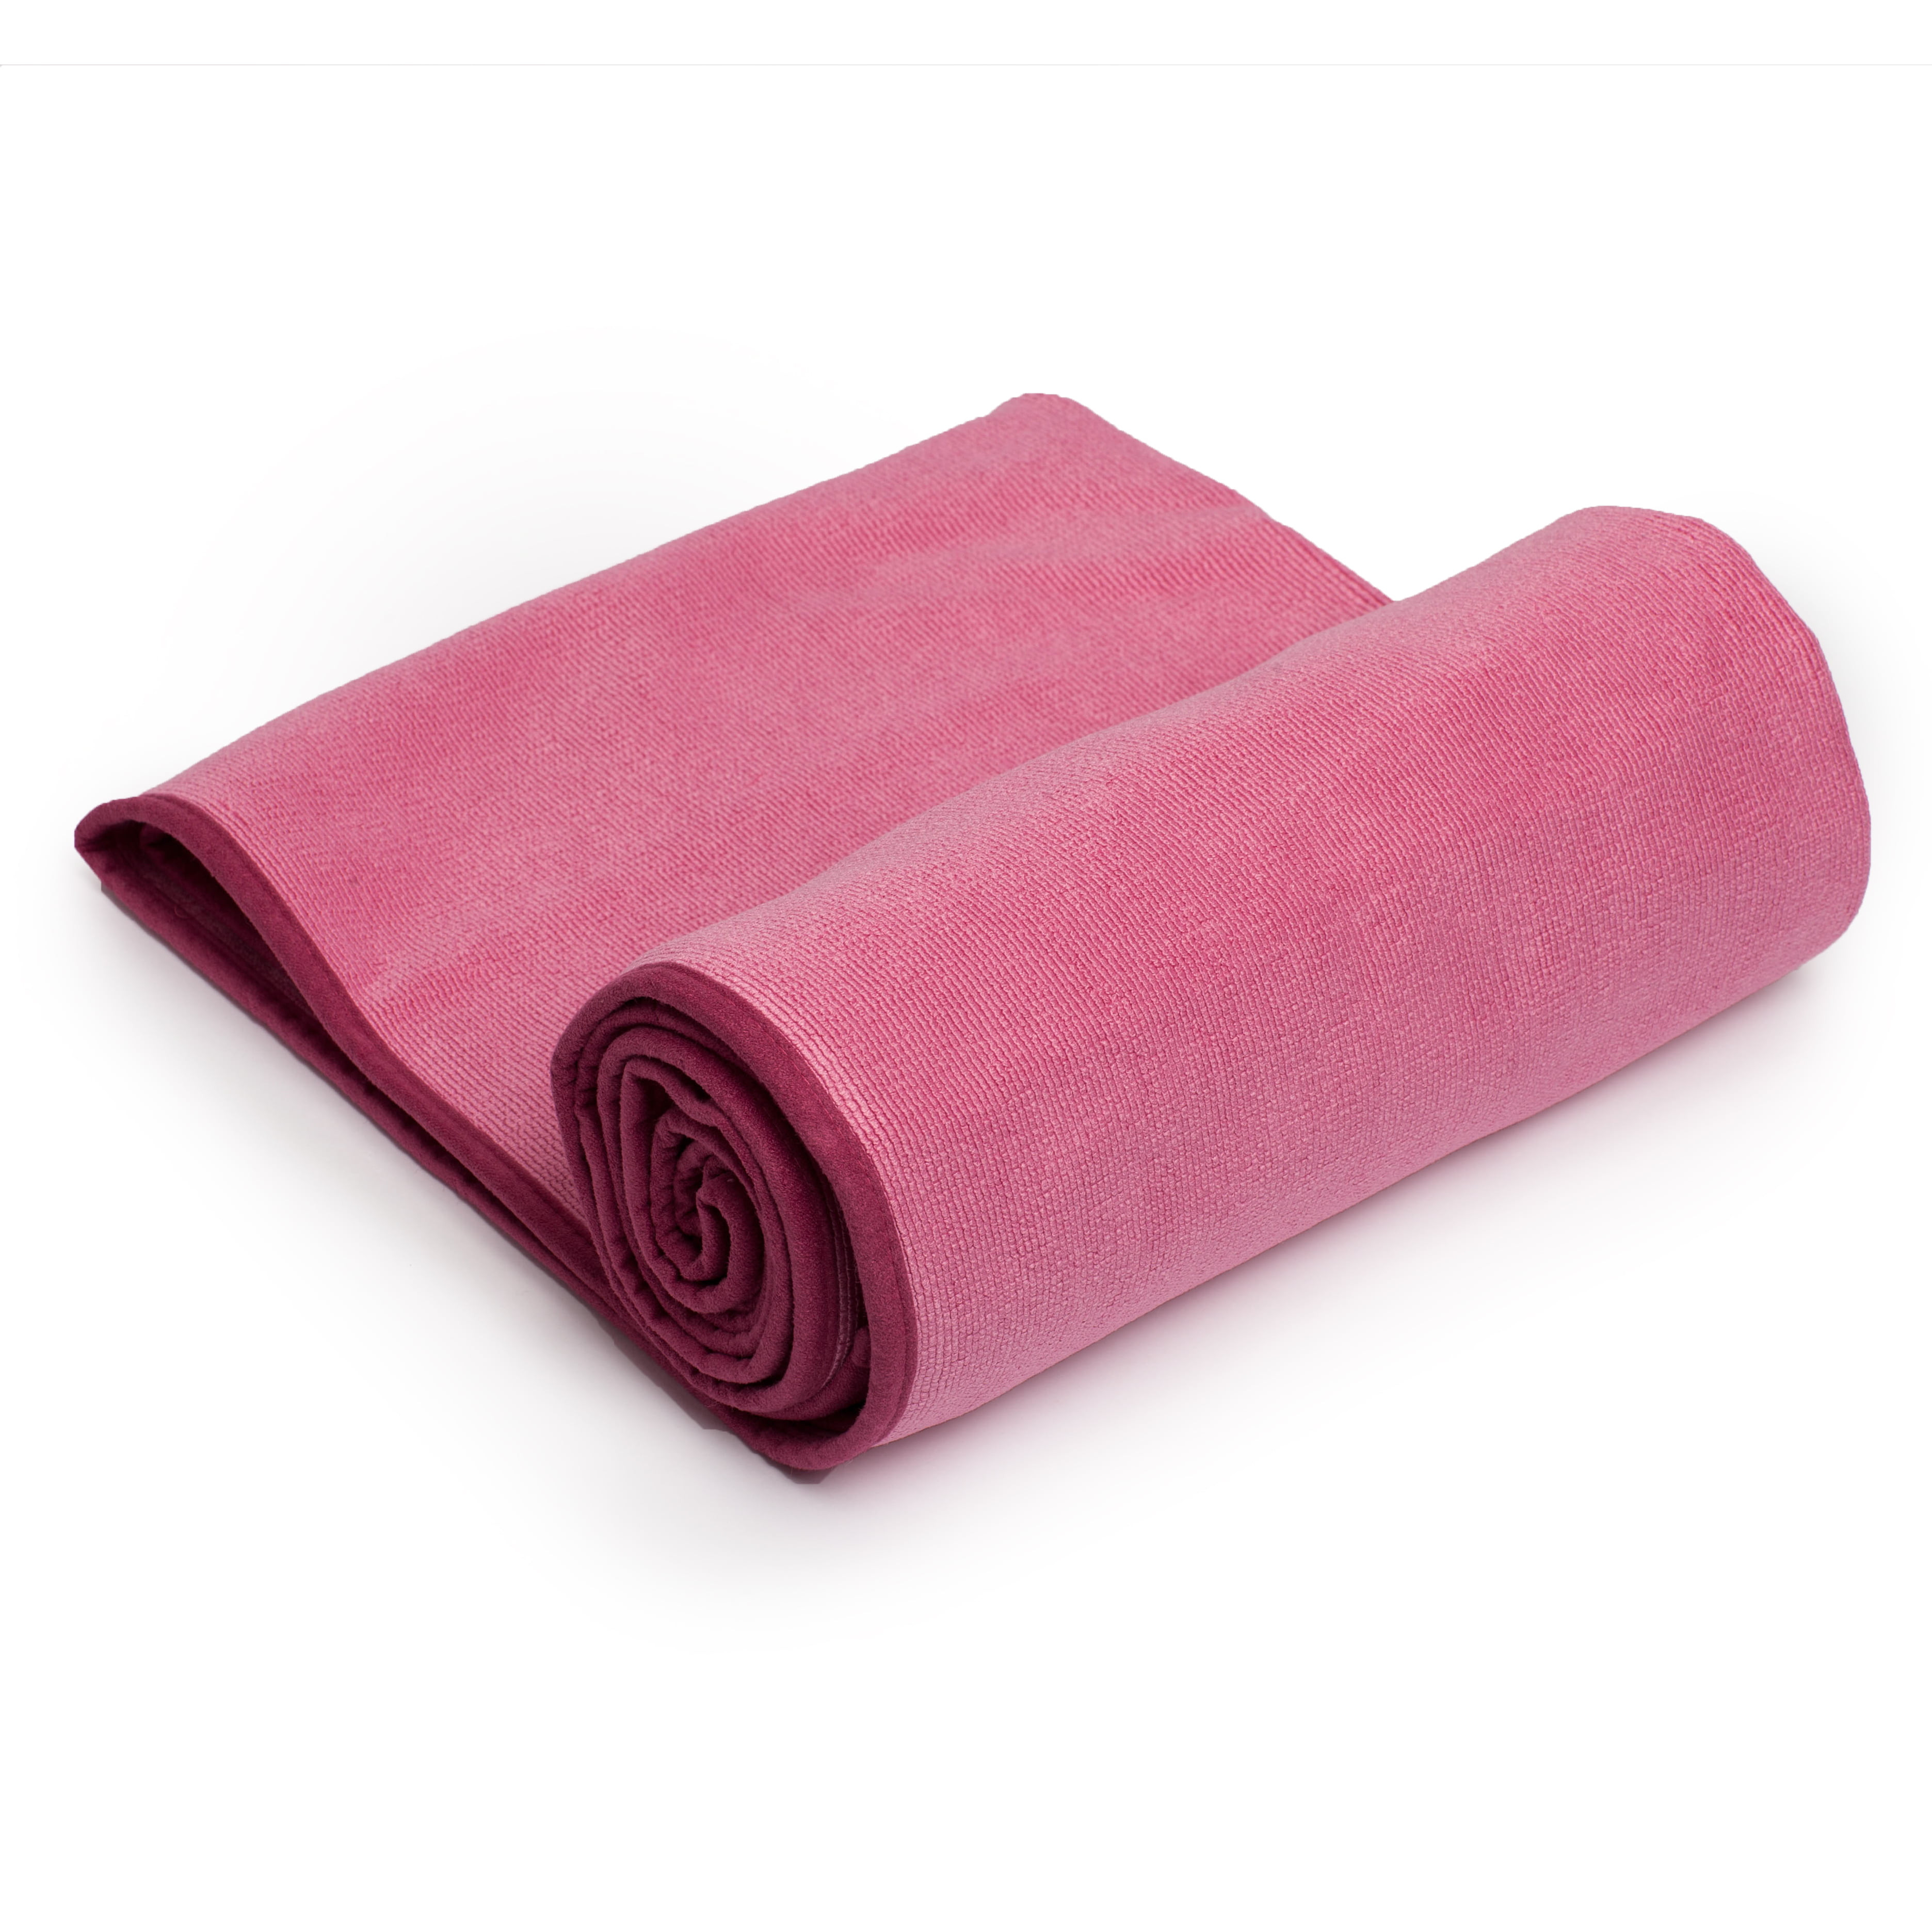 YogaRat Microfibre Yoga Towel - Hazel/Violet 